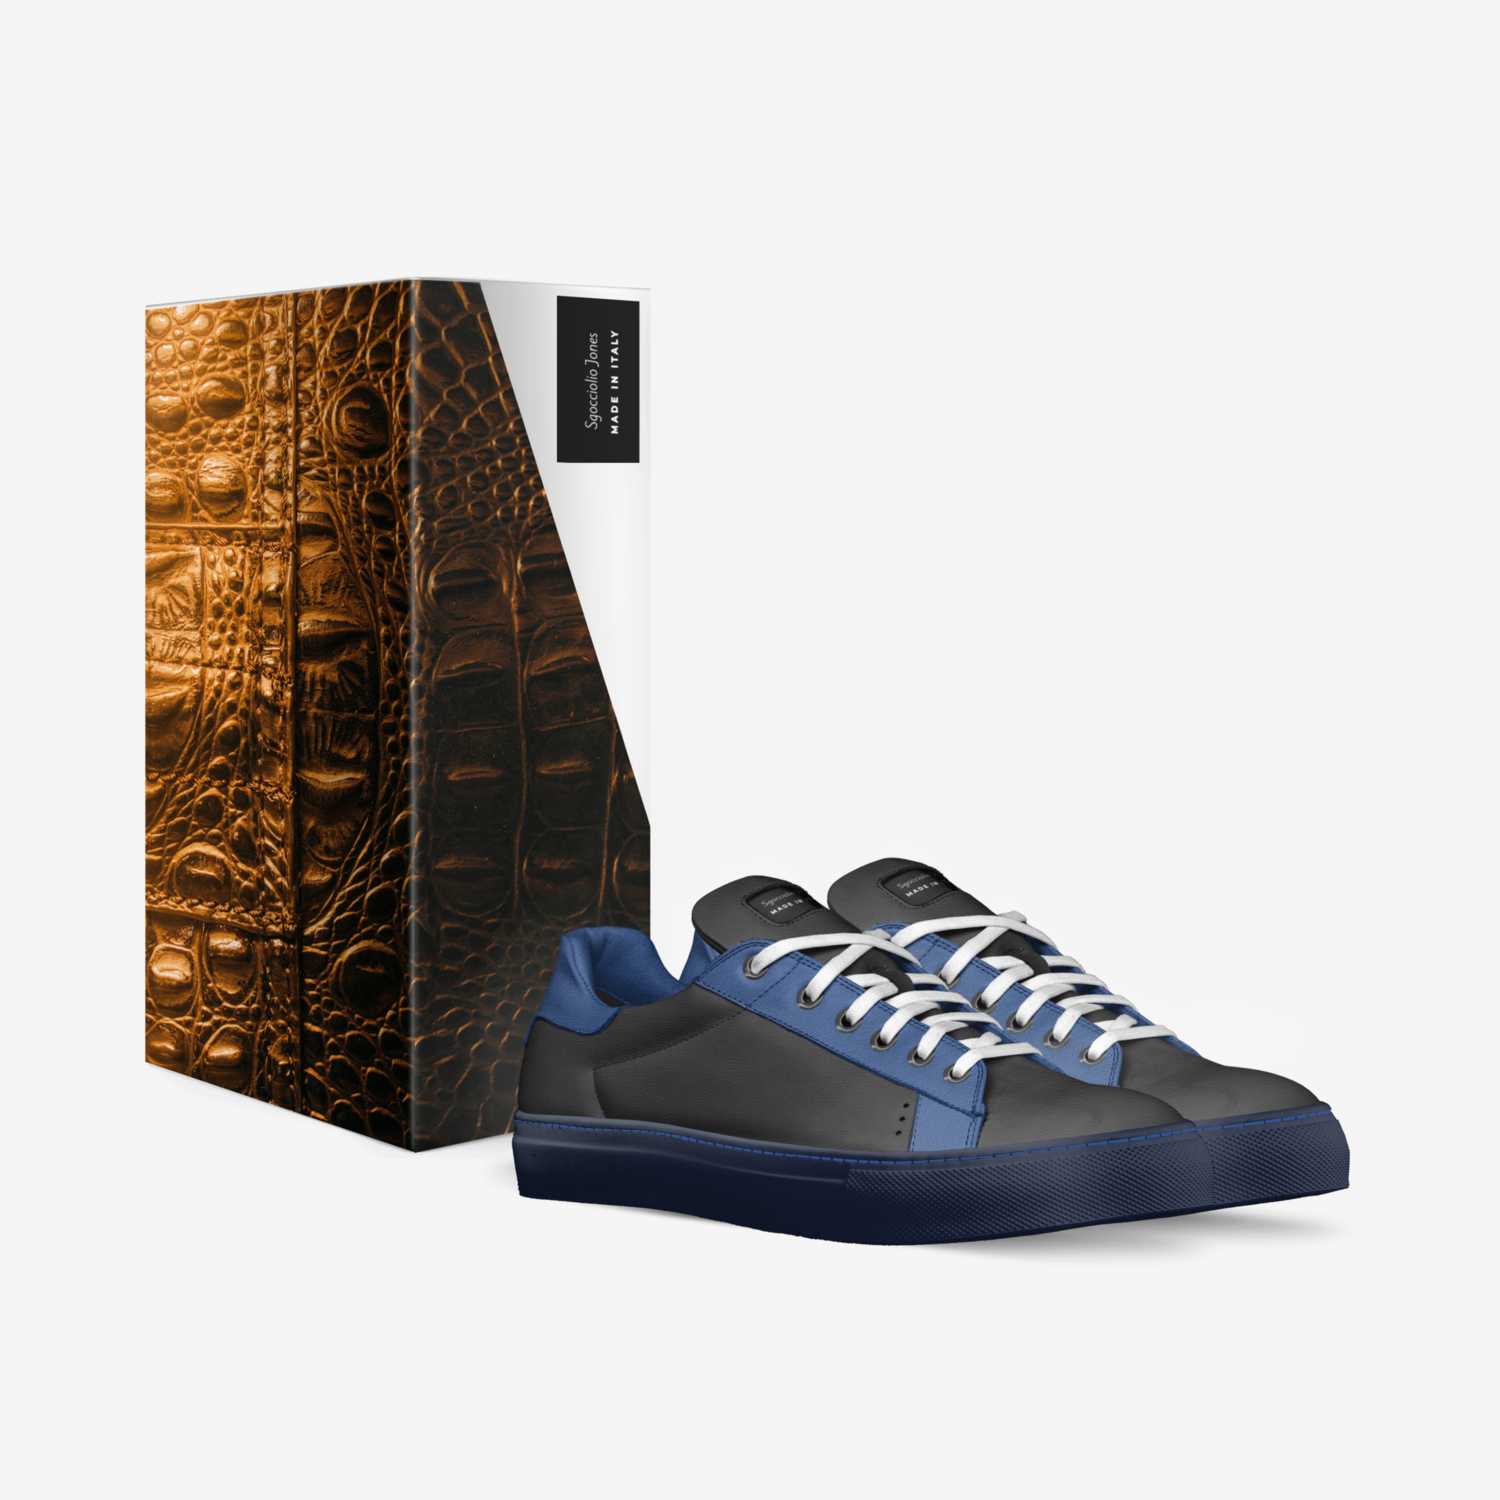 Sgocciolio Jones custom made in Italy shoes by Herman Jones | Box view